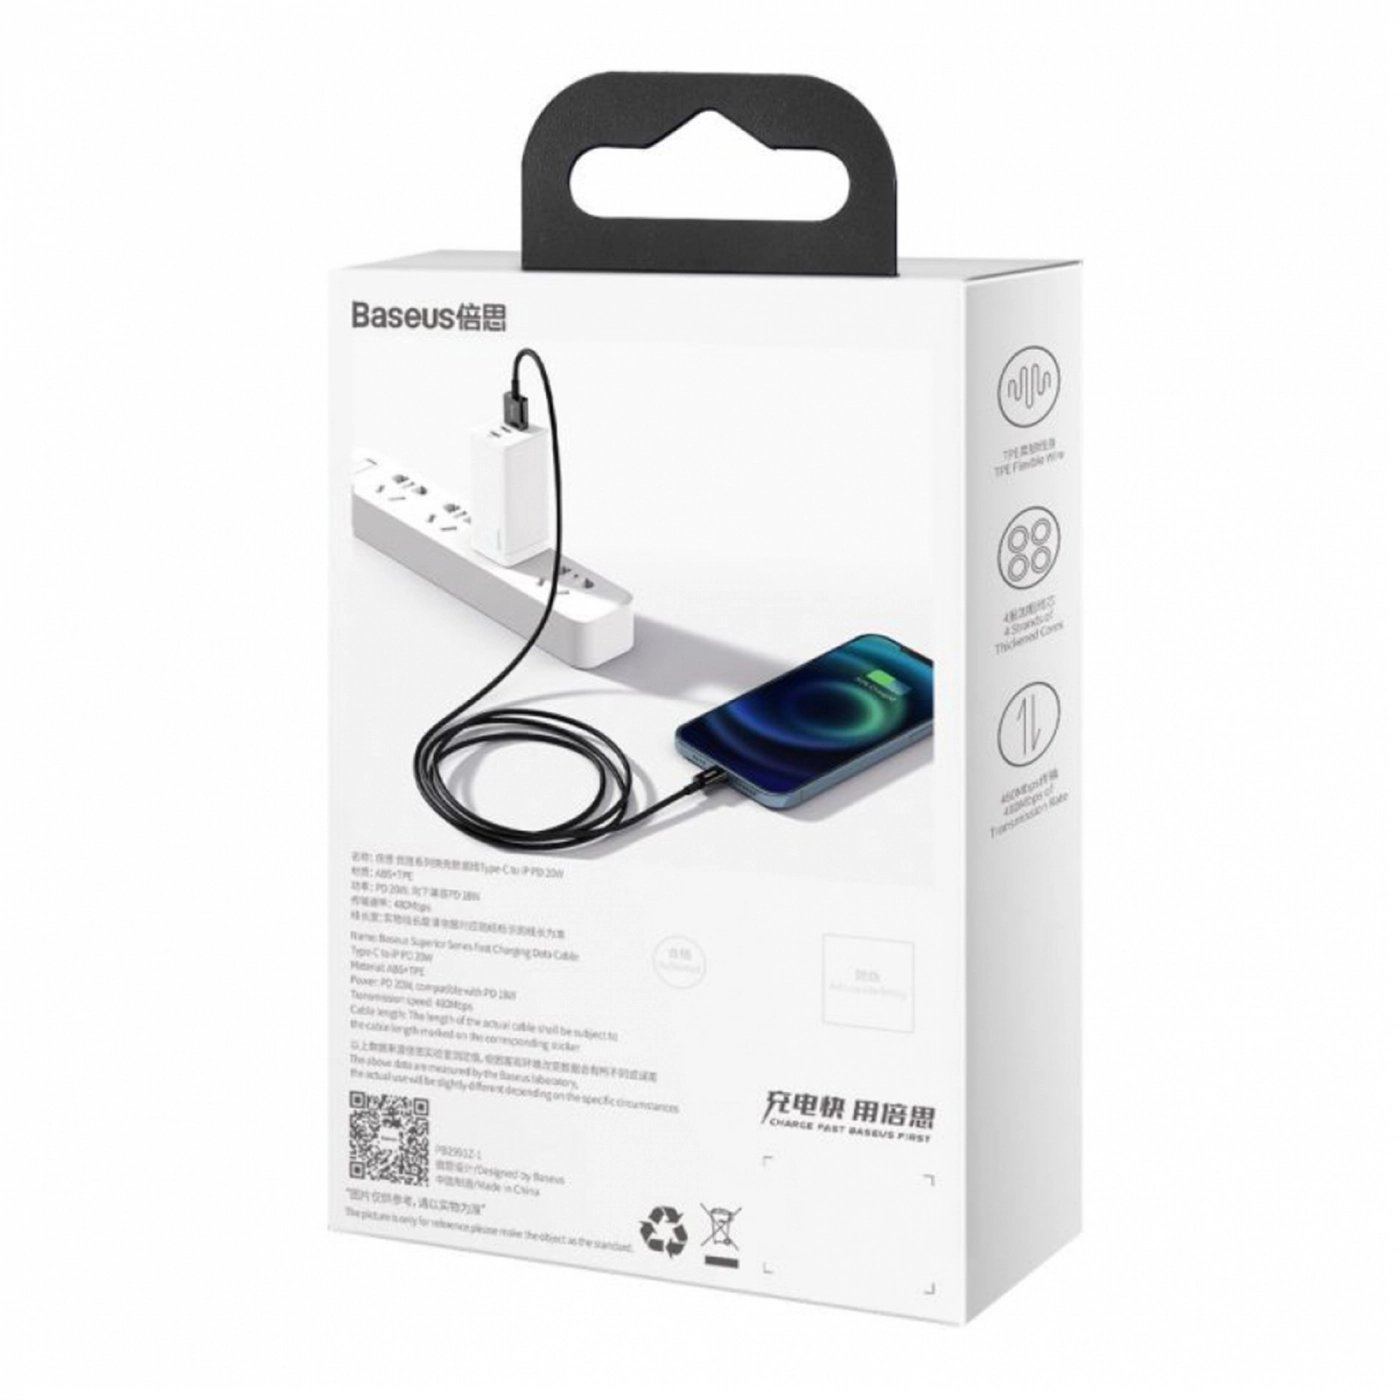 Купить Кабель Baseus Superior Series Fast Charging Data Cable USB to iP 2.4A 1m Black - фото 7